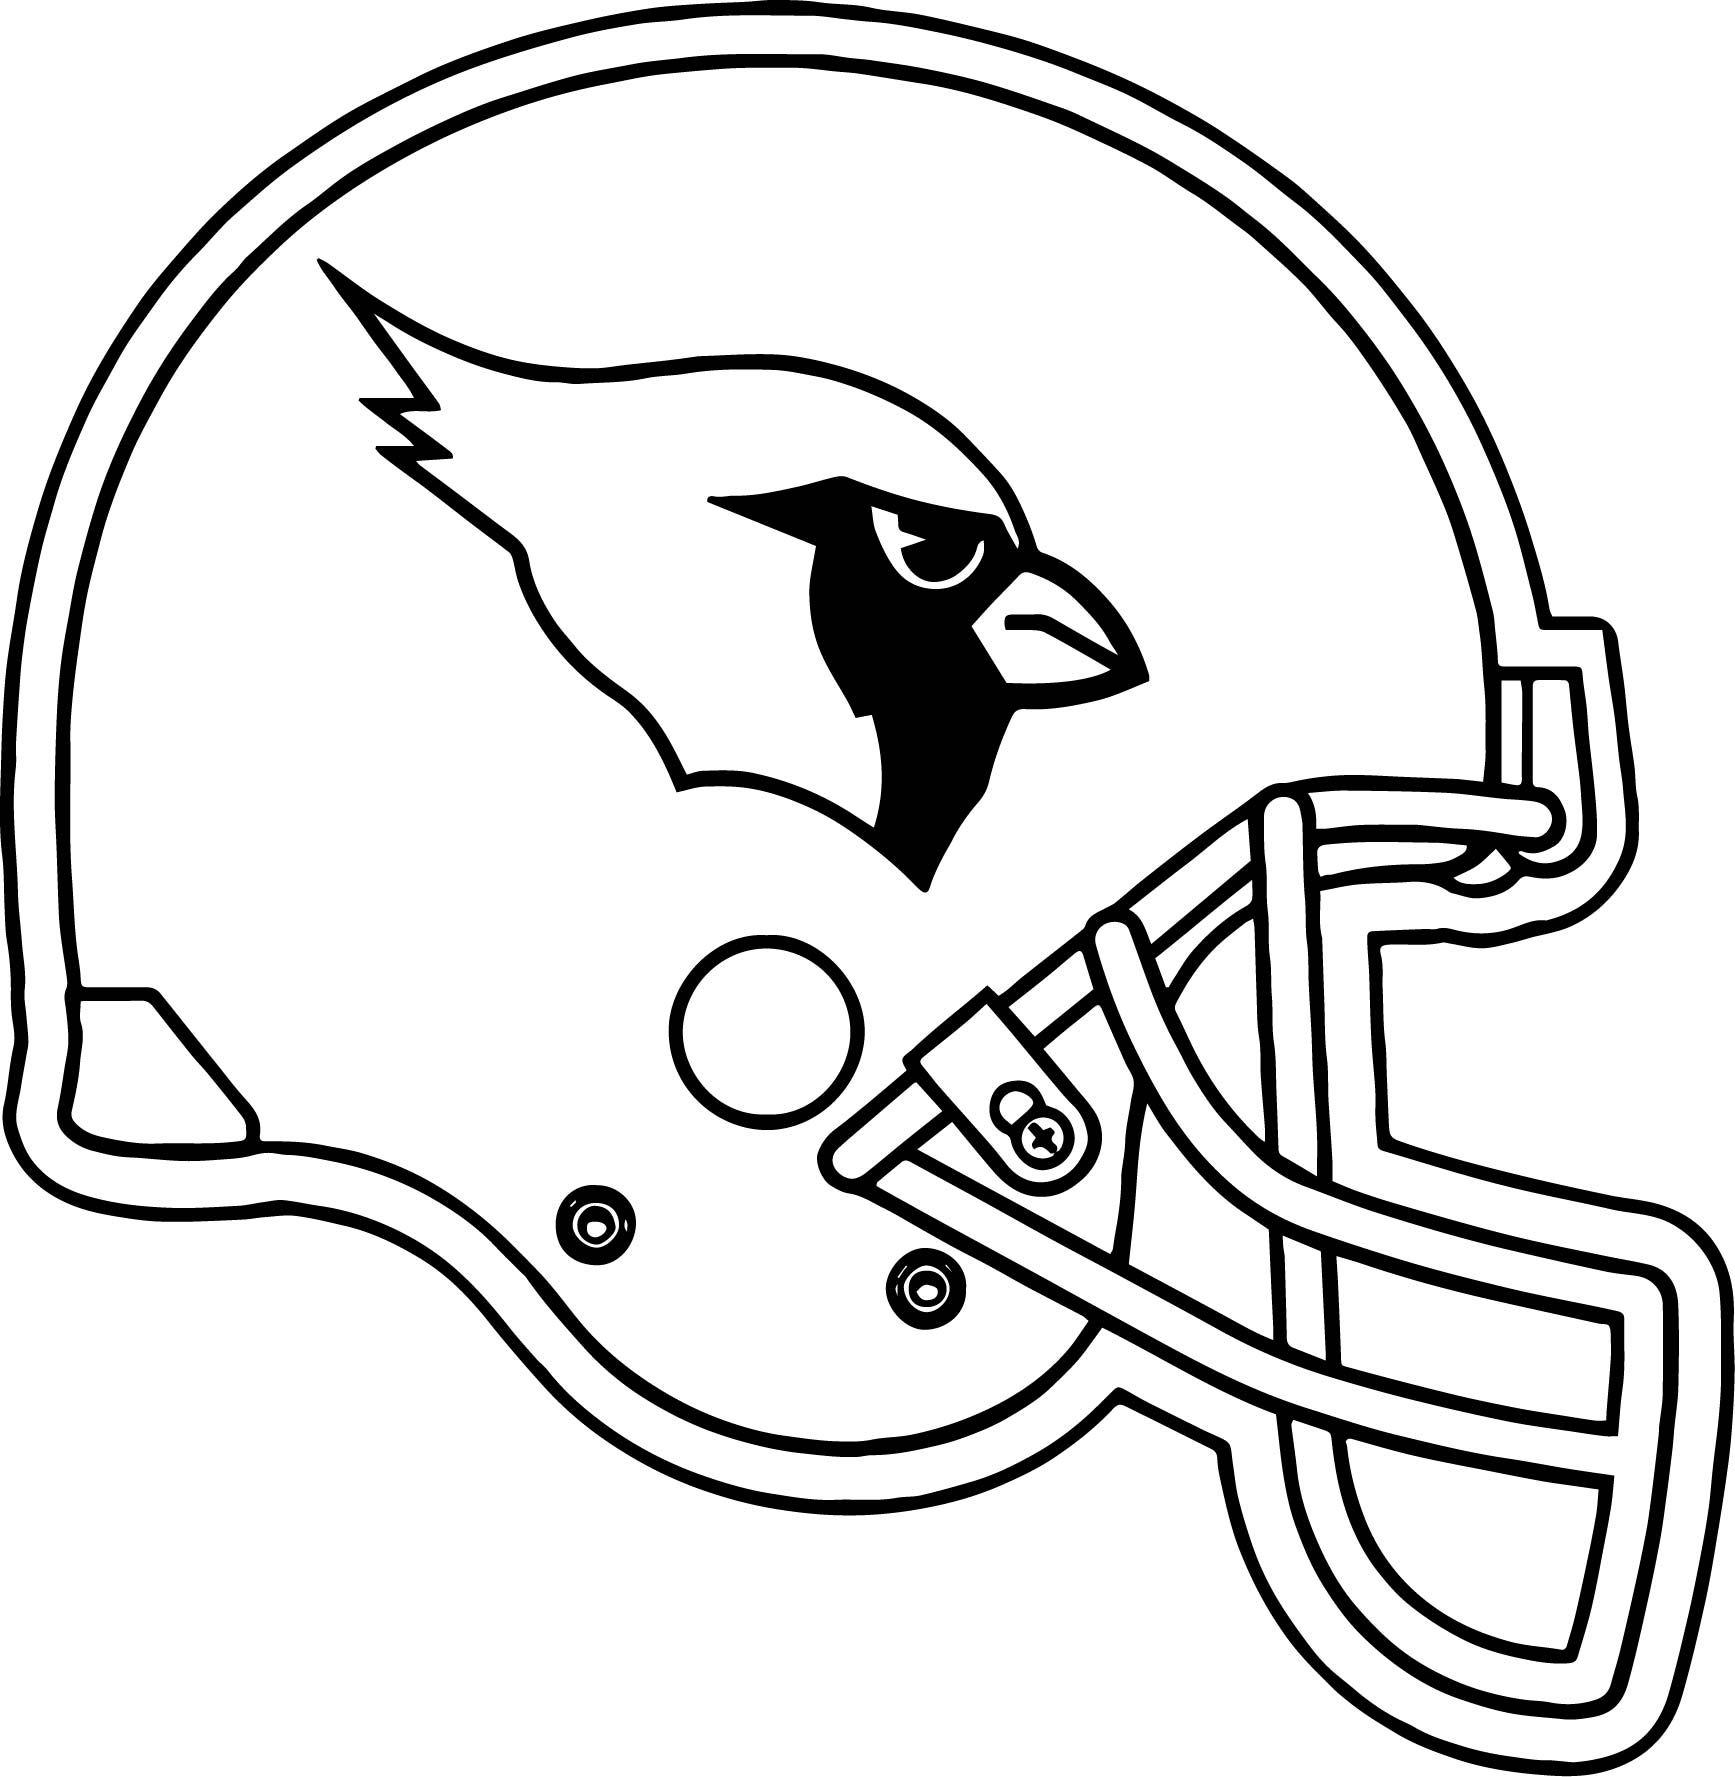 cool Arizona Cardinals Helmet Coloring Page | Football helmets ...